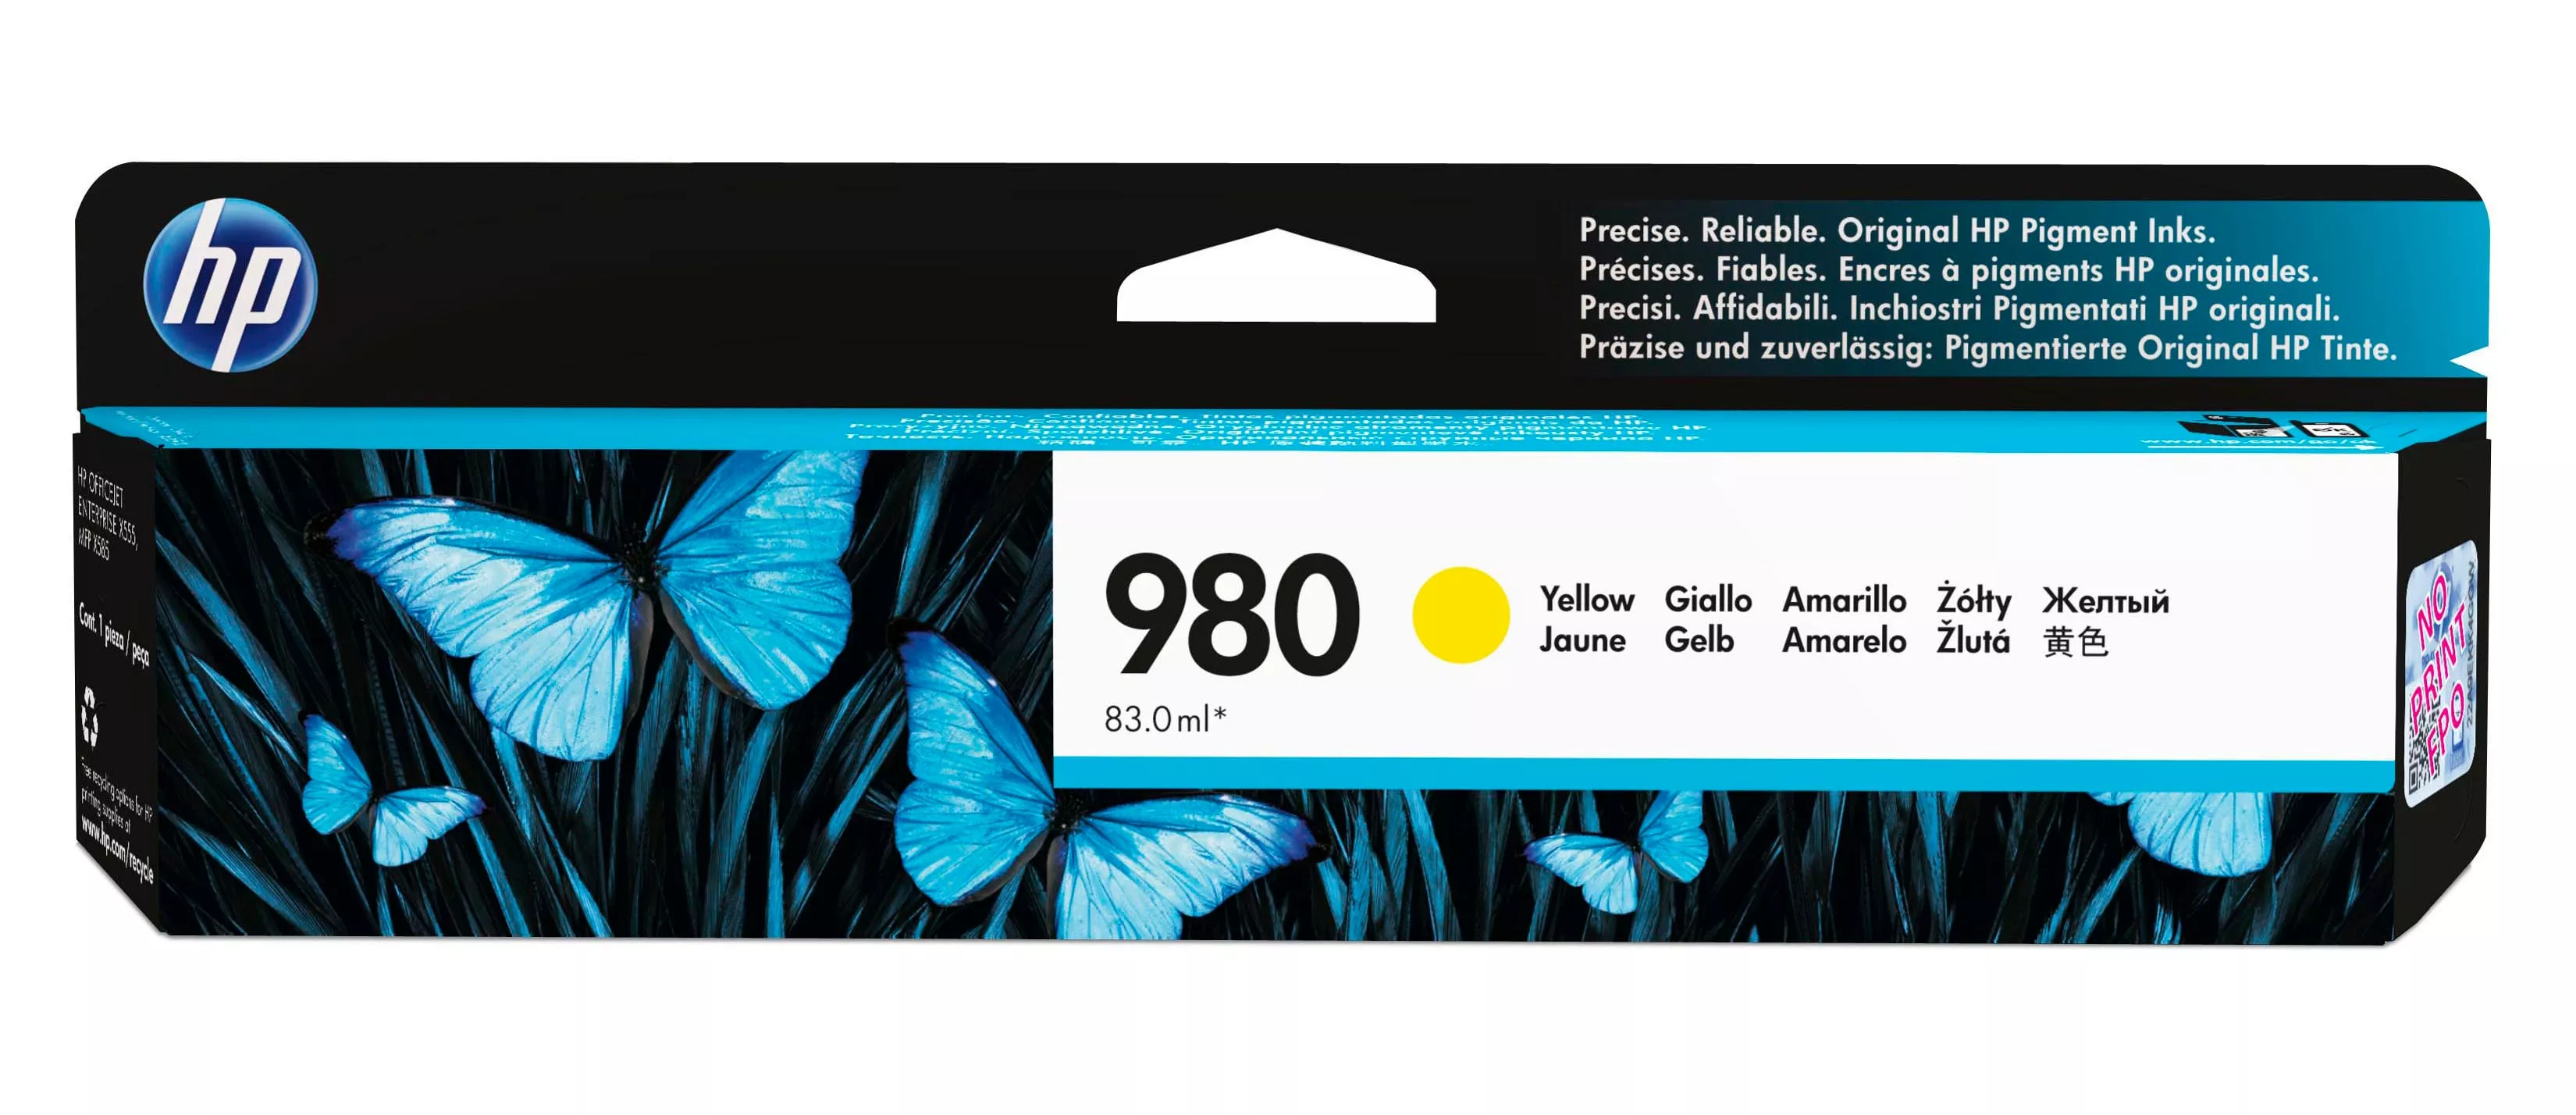 Achat HP 980A original Ink cartridge D8J09A yellow standard au meilleur prix